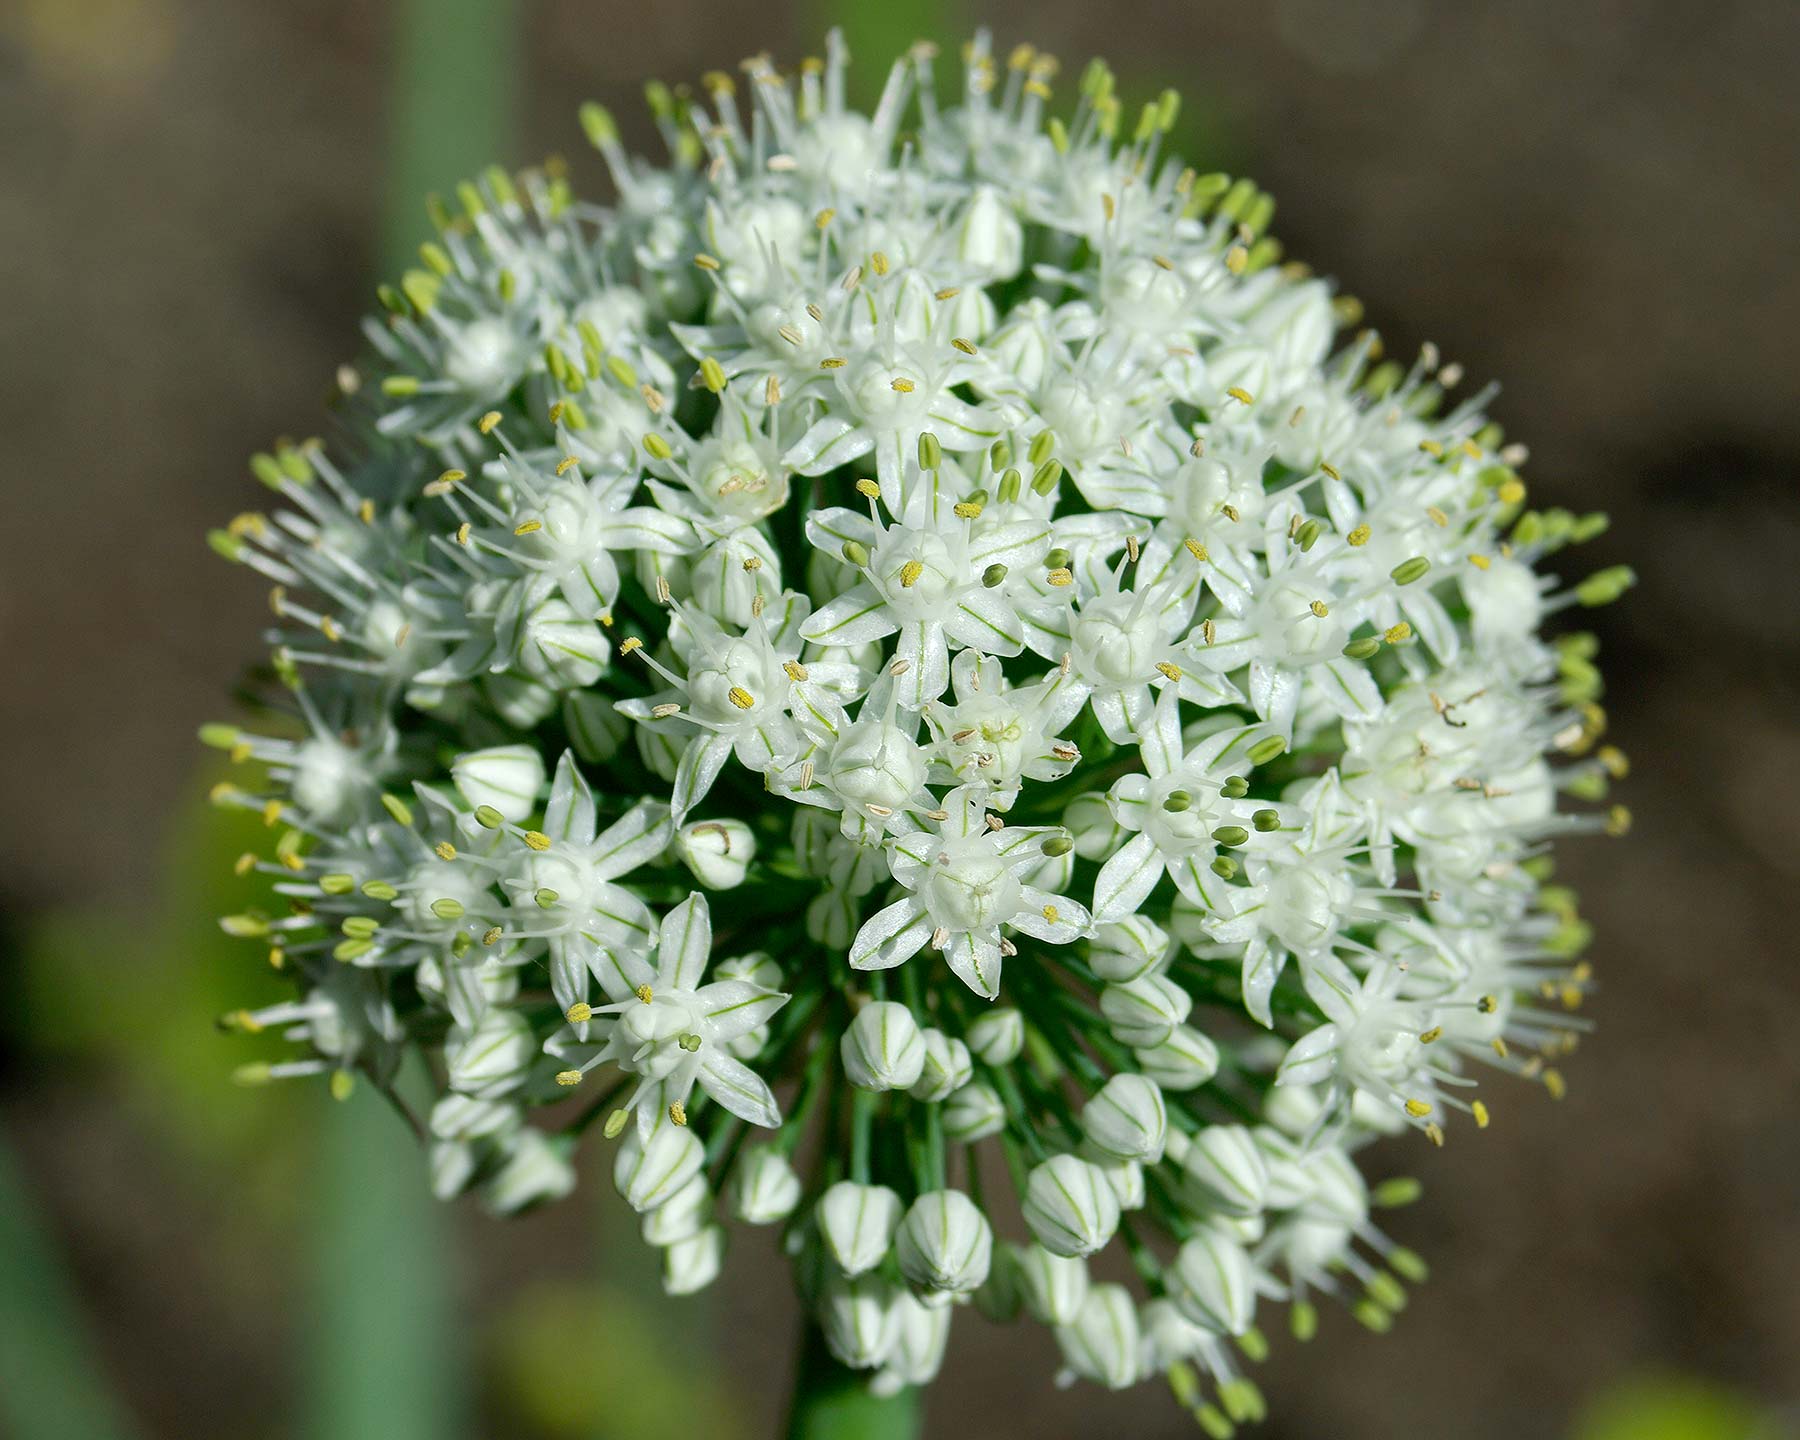 Alium cepa, Onion flower